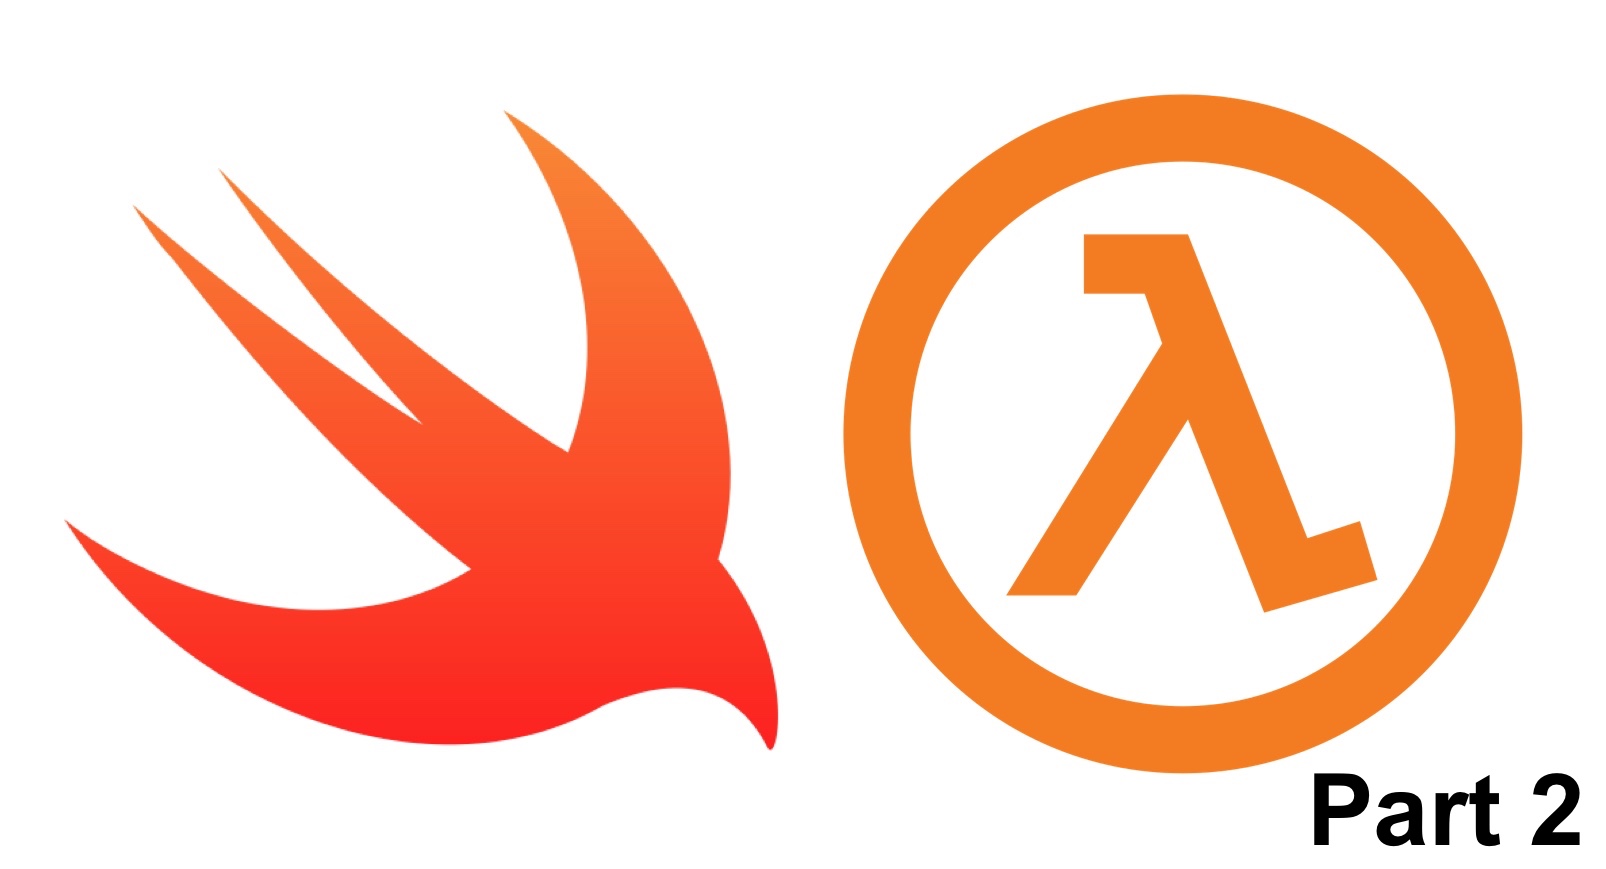 Websites using Swift and AWS Lambda — Part 2